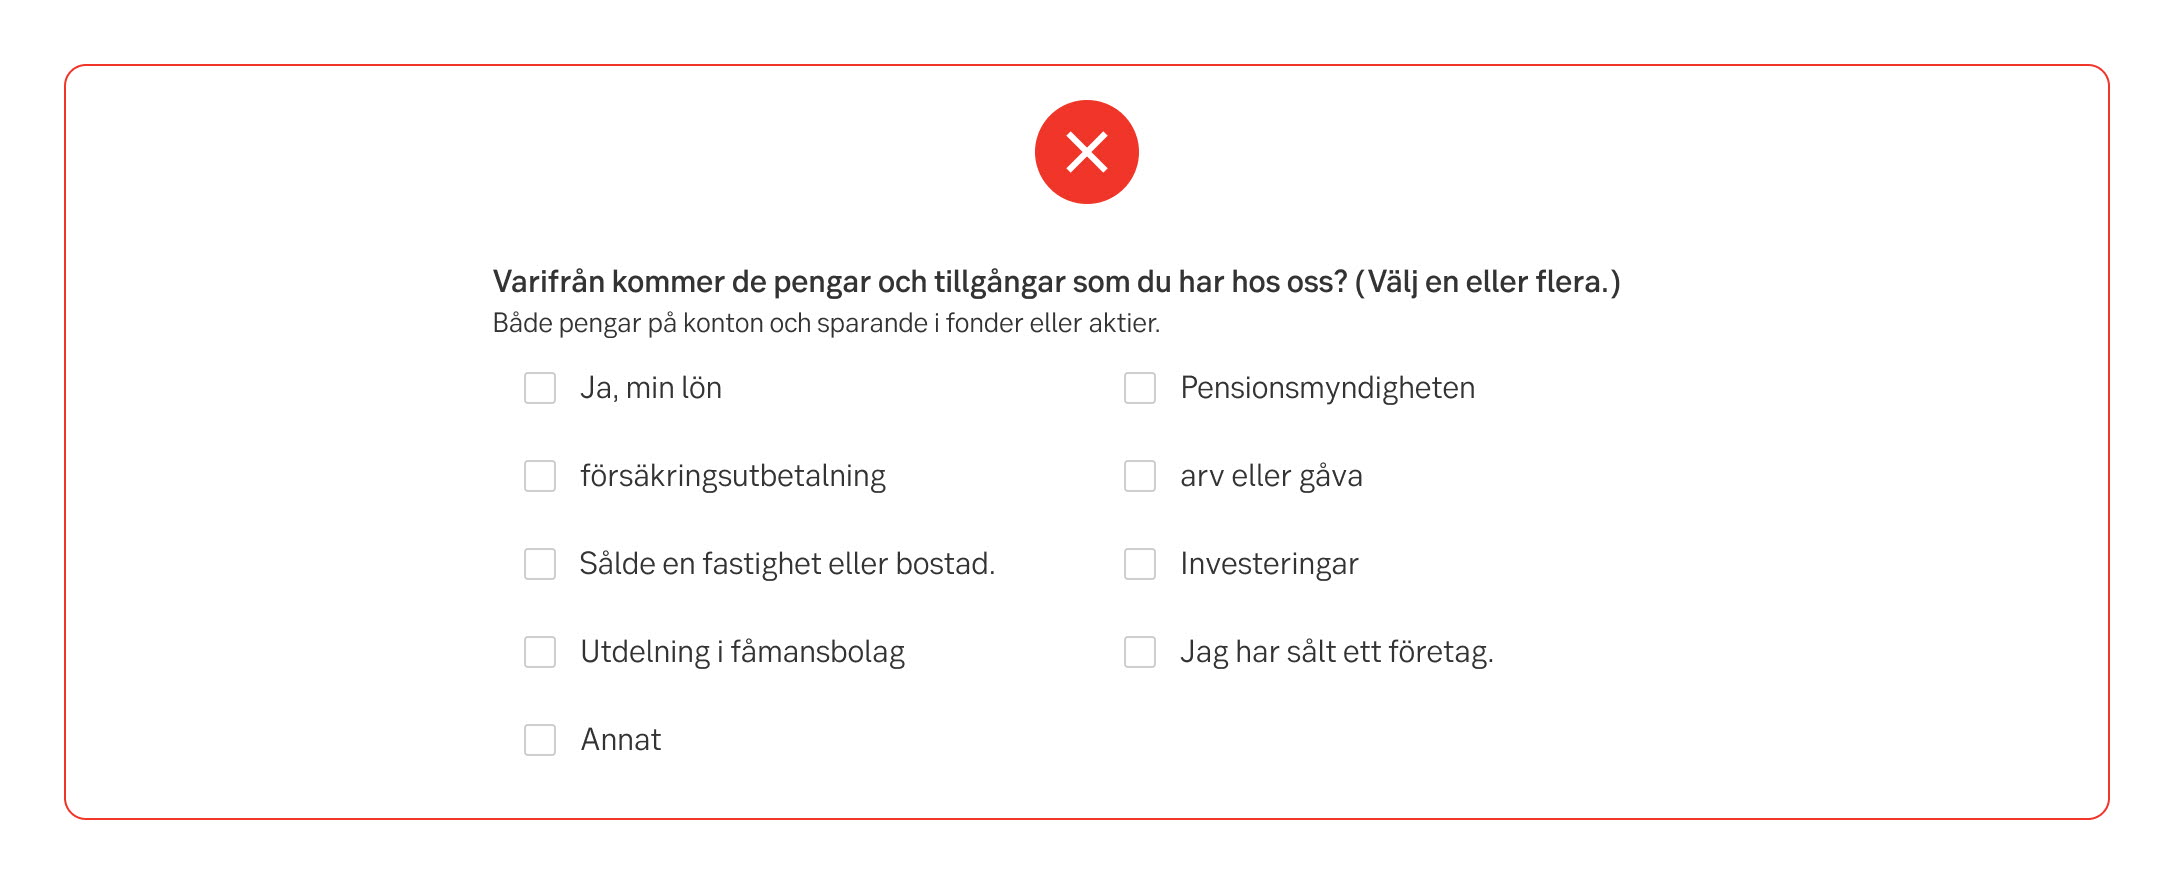 Inconsistent options (Swedish)